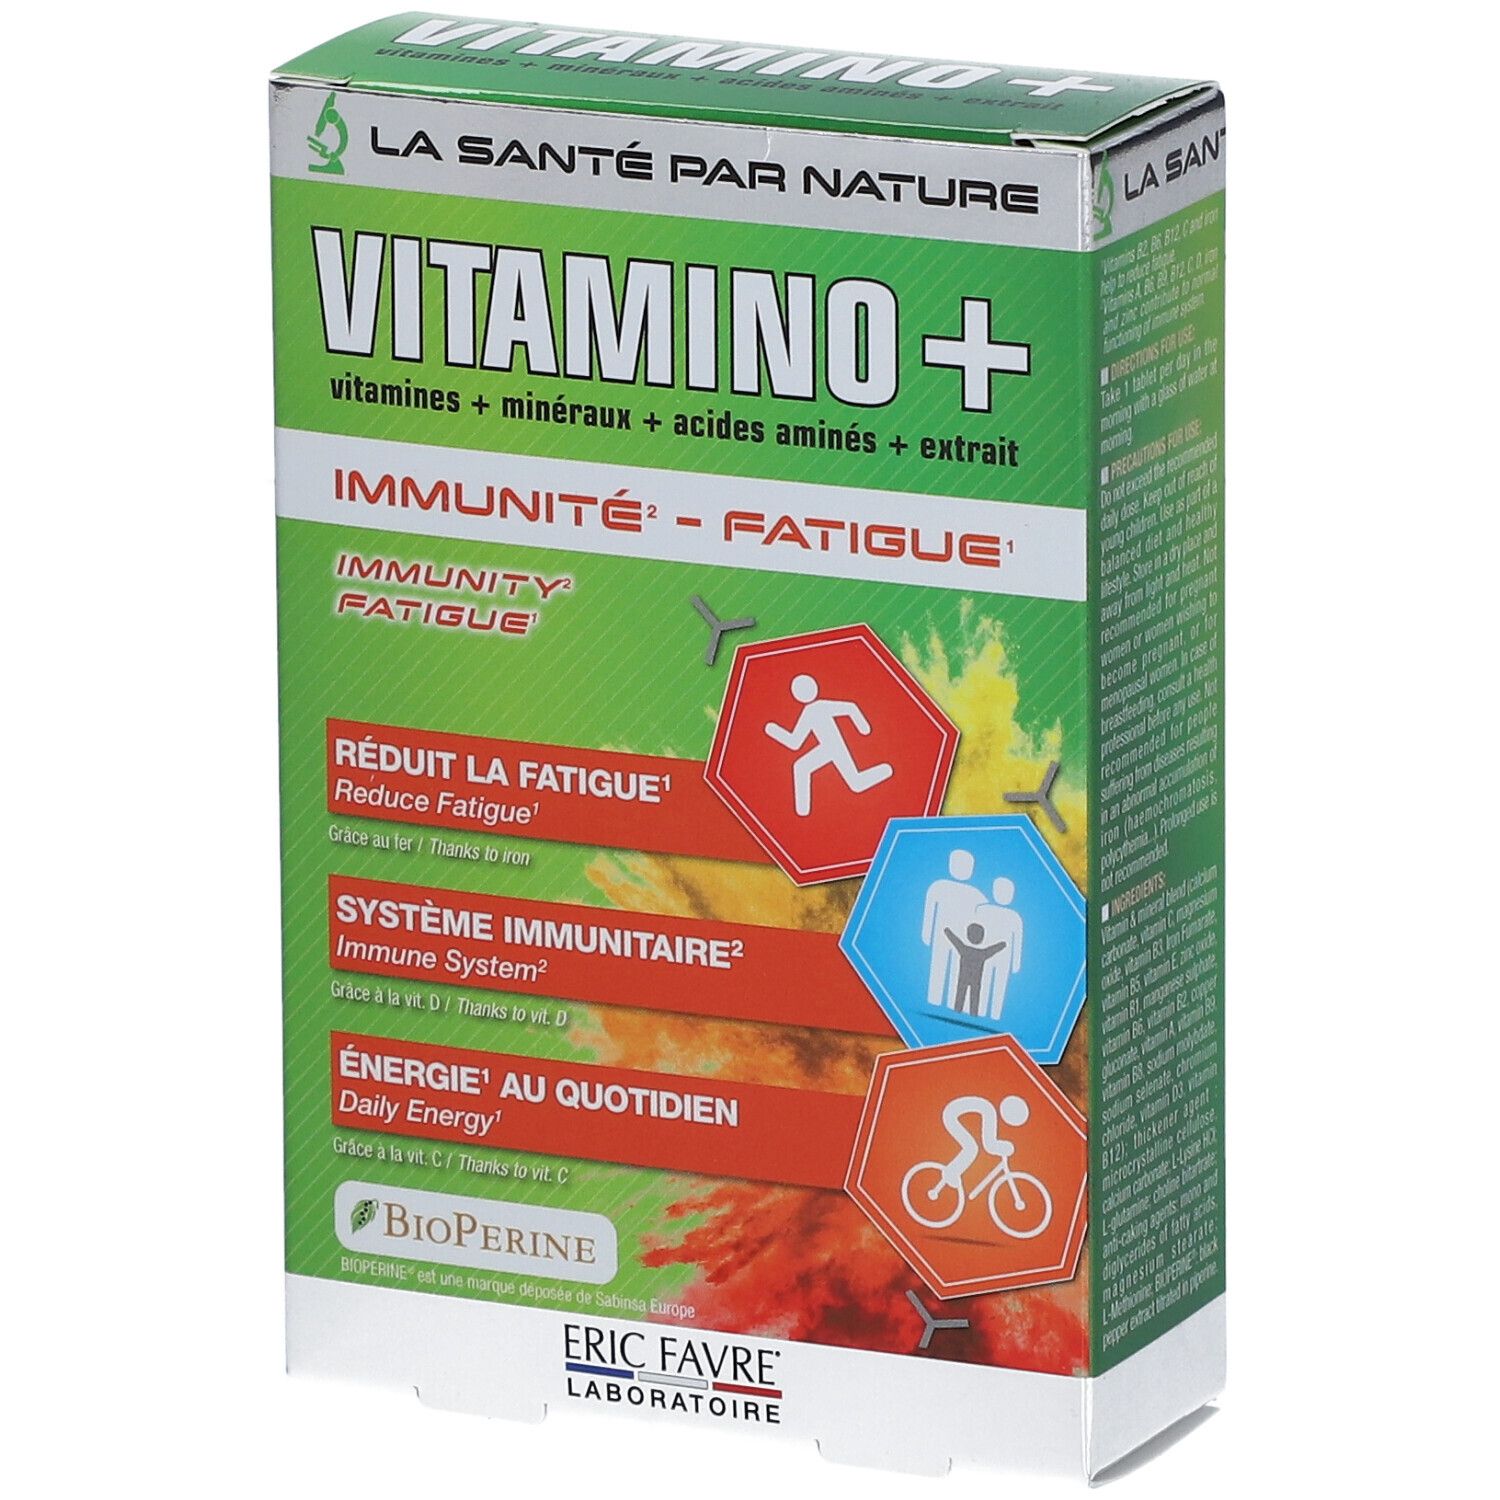 Eric Favre Vitamino+ Immunité, fatigue, Multivitamines et minéraux